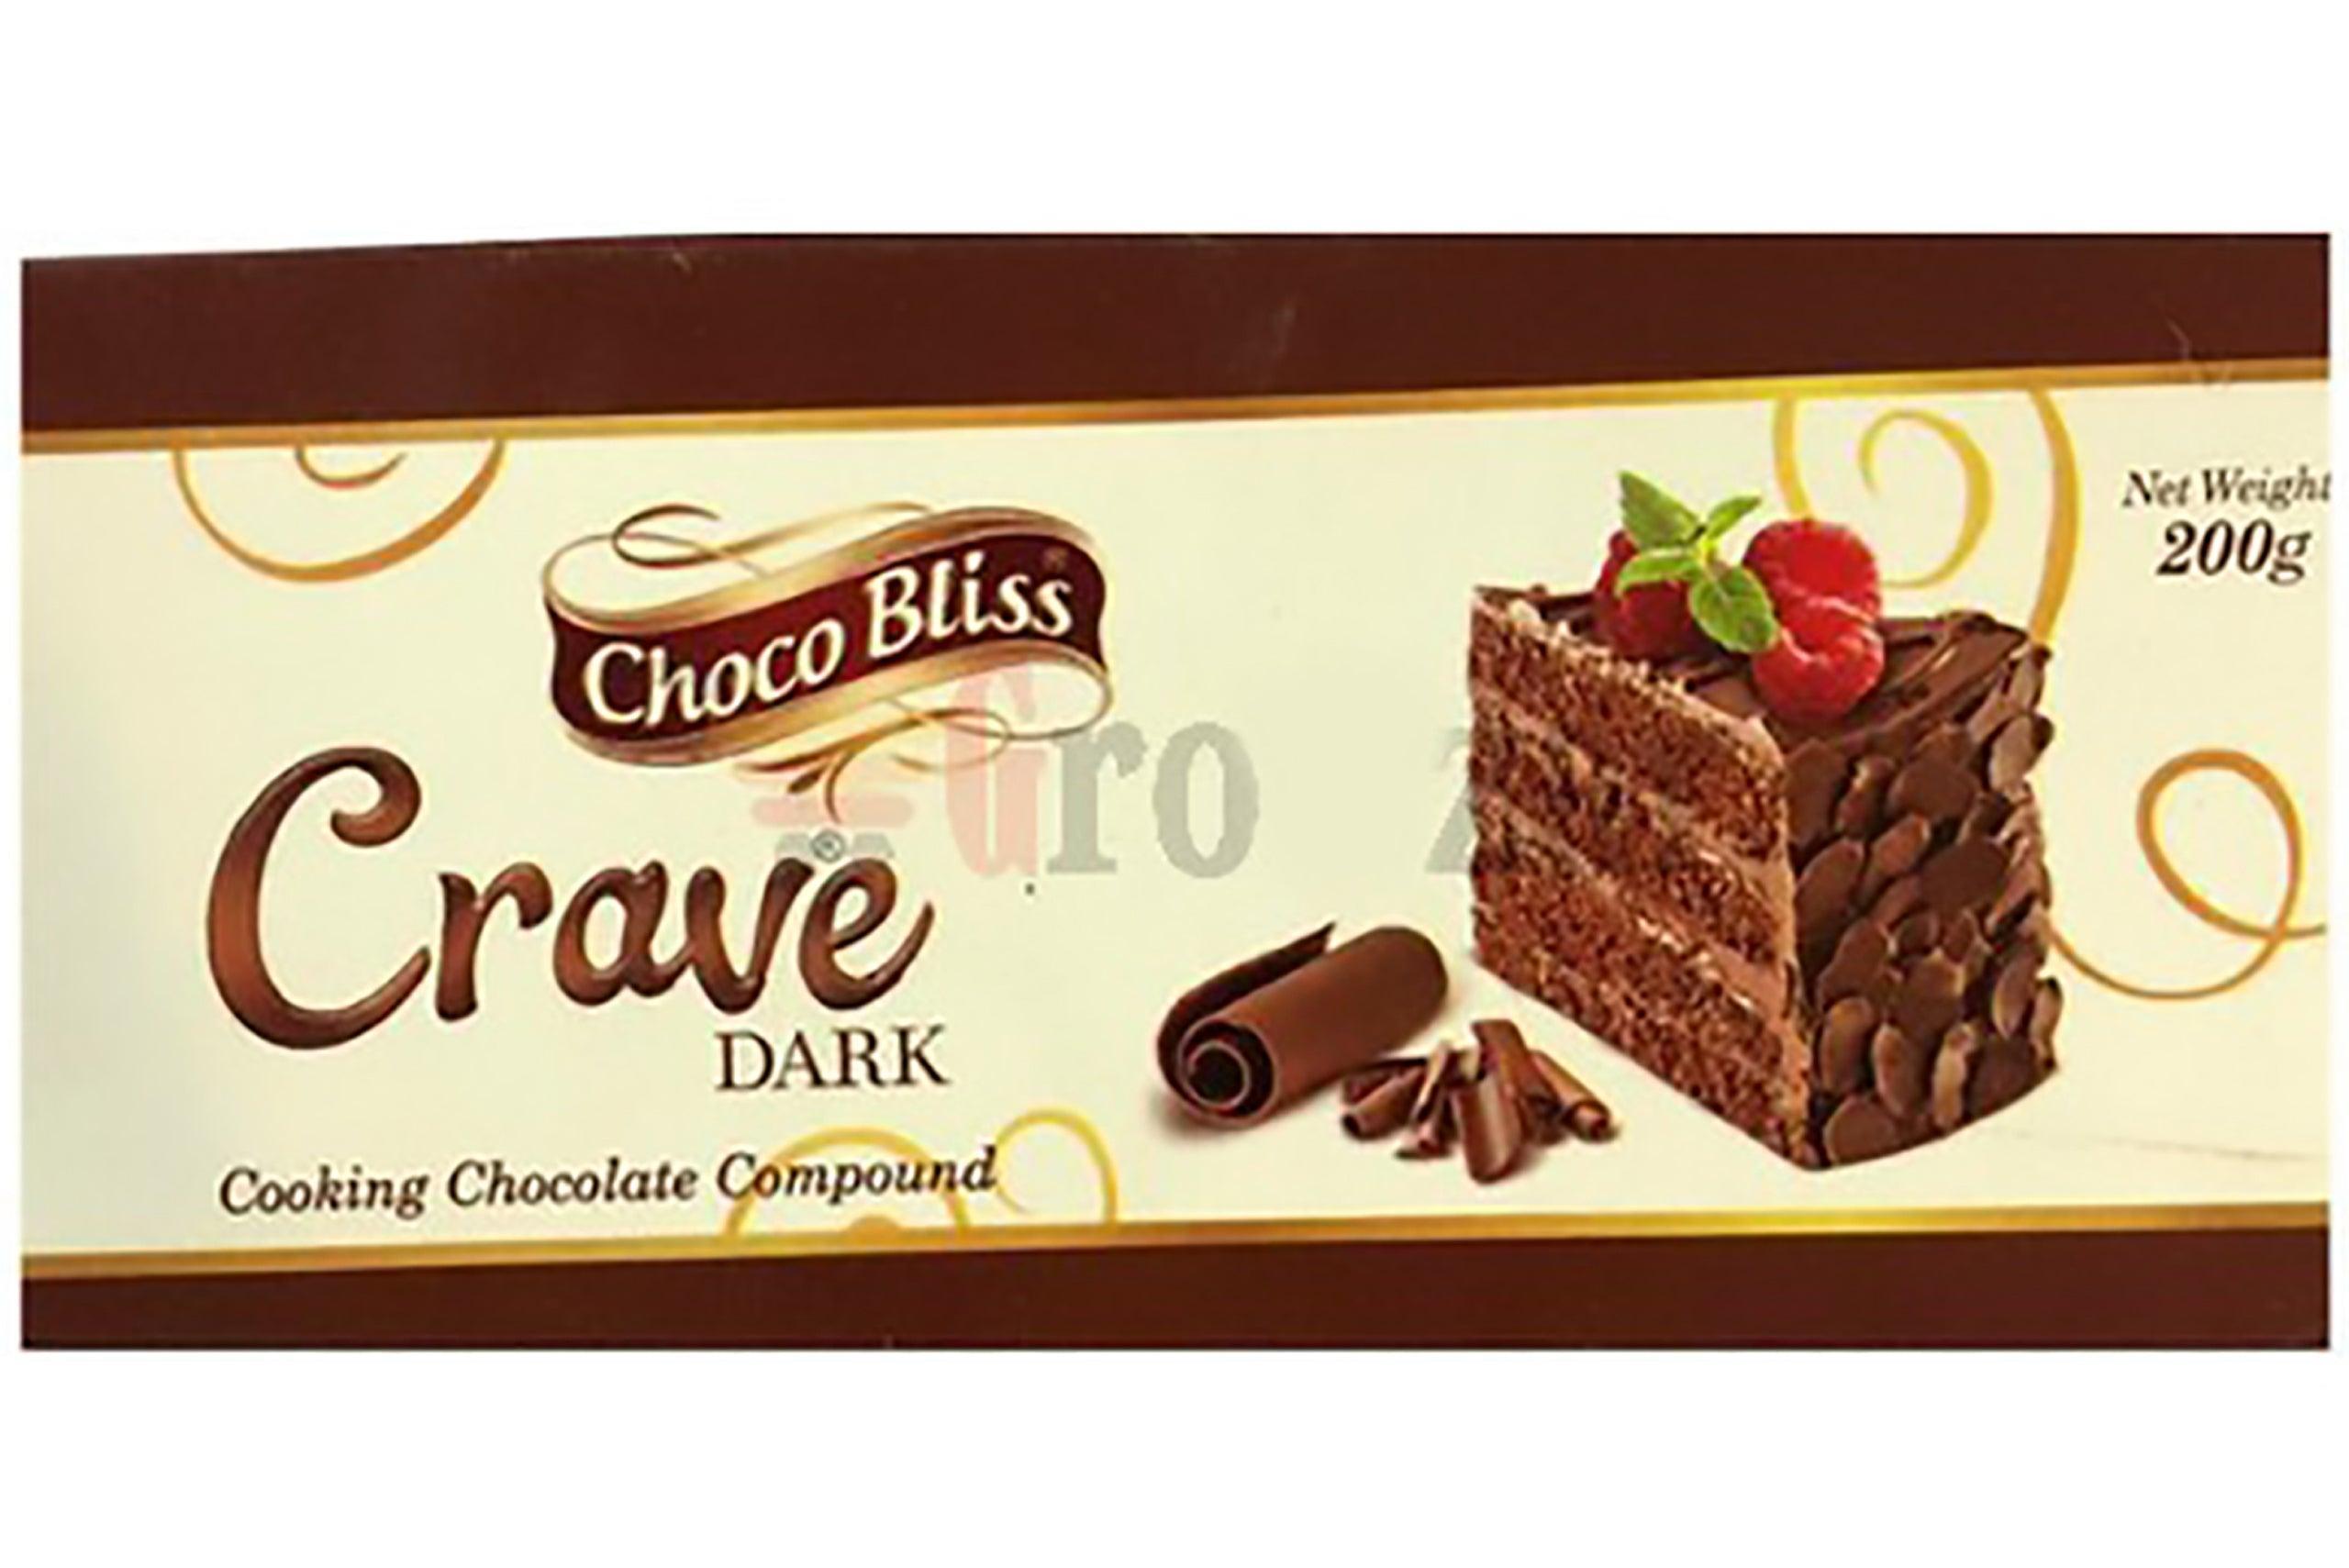 CHOCO BLISS CRAVE CHOCOLATE COMPOUND 200GM - Nazar Jan's Supermarket